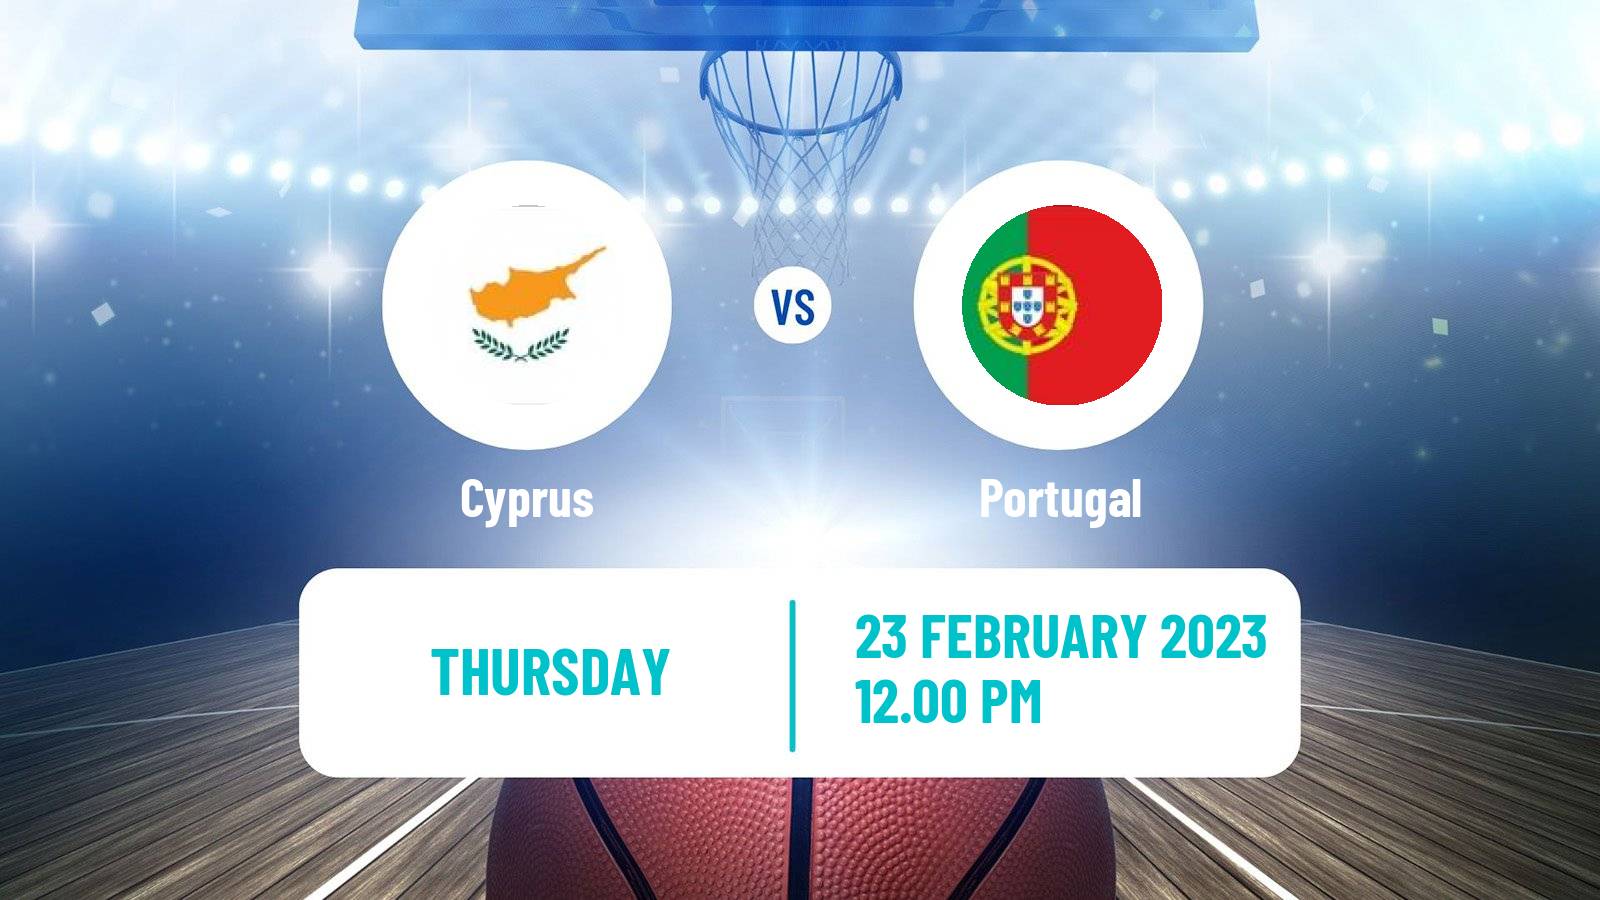 Basketball EuroBasket Cyprus - Portugal